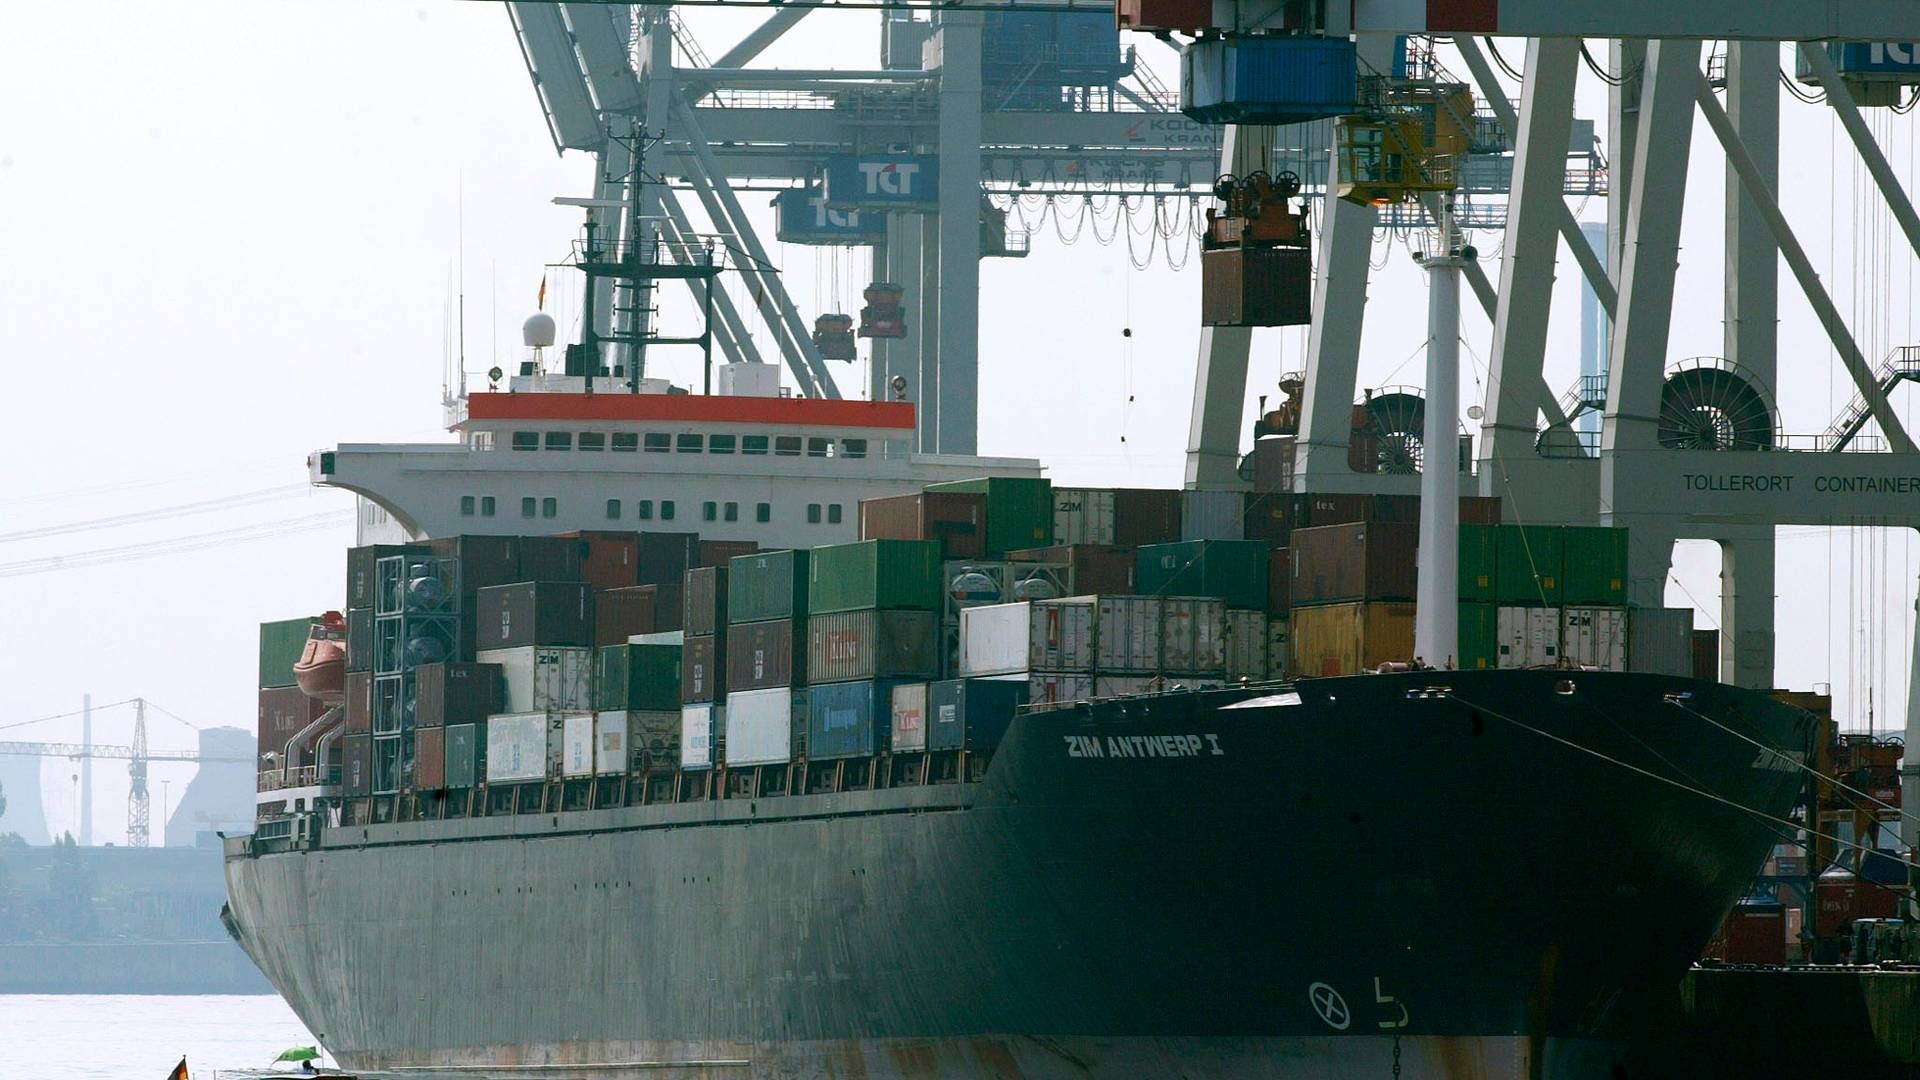 Zim er israels største containerrederi. | Foto: Christian Charisius/Reuters/Ritzau Scanpix